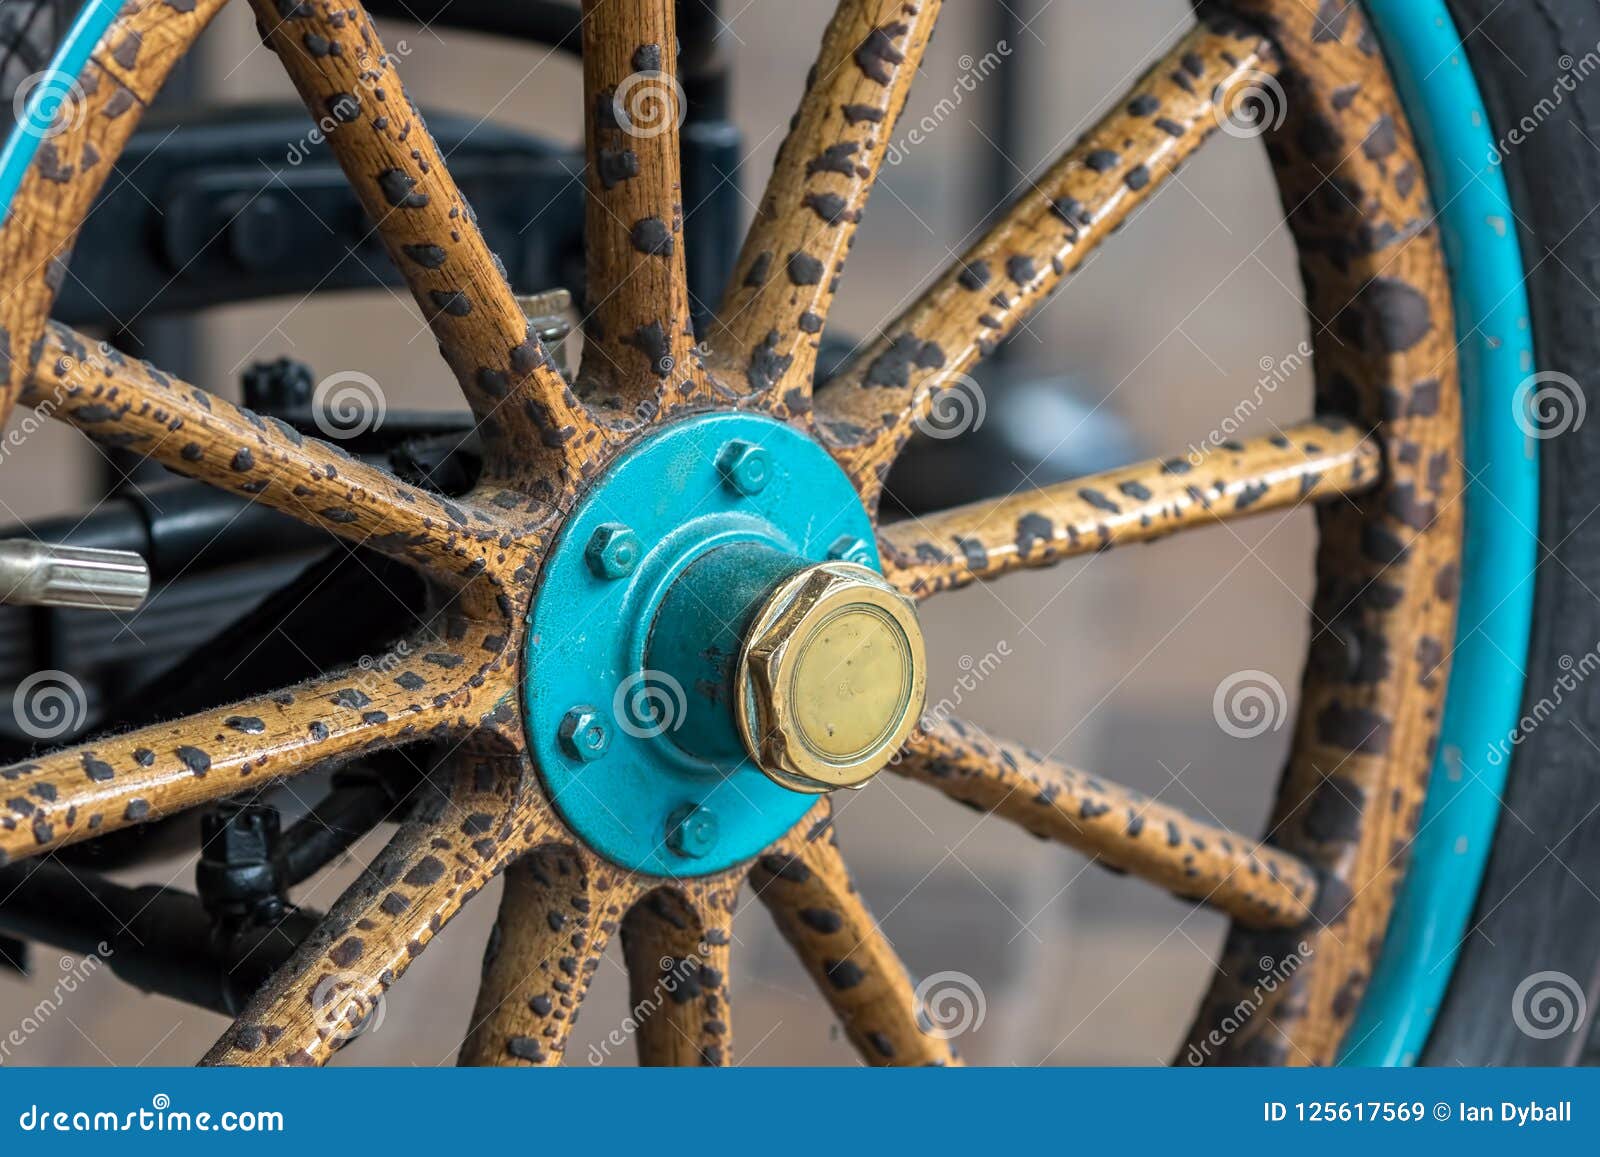 vintage wooden spoke car wheel. close-up of wood spokes